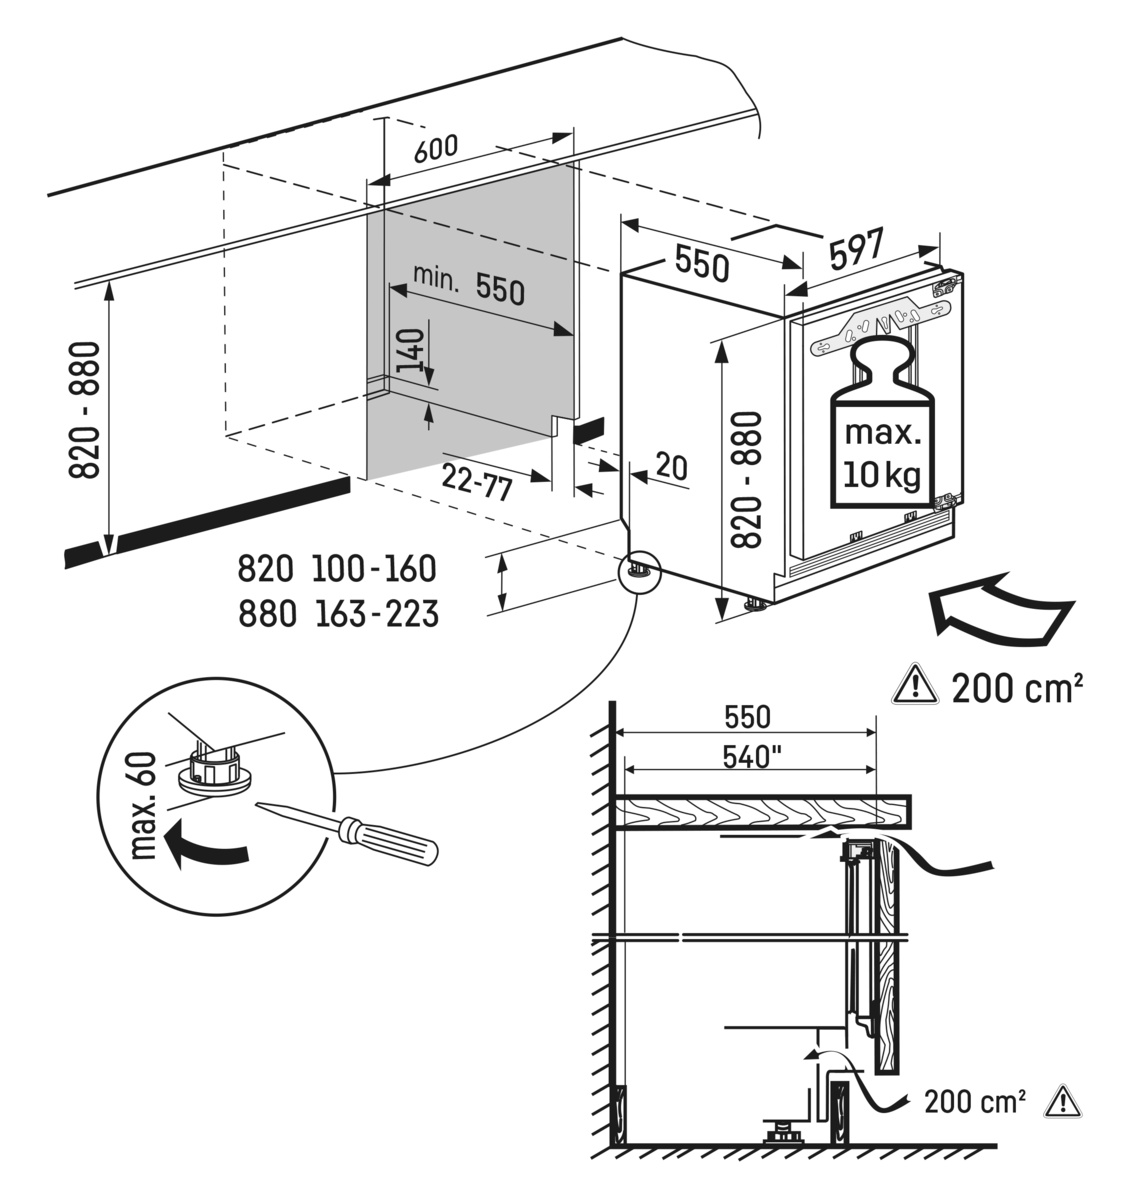 Maattekening LIEBHERR koelkast biofresh inbouw SUIB 1550-25